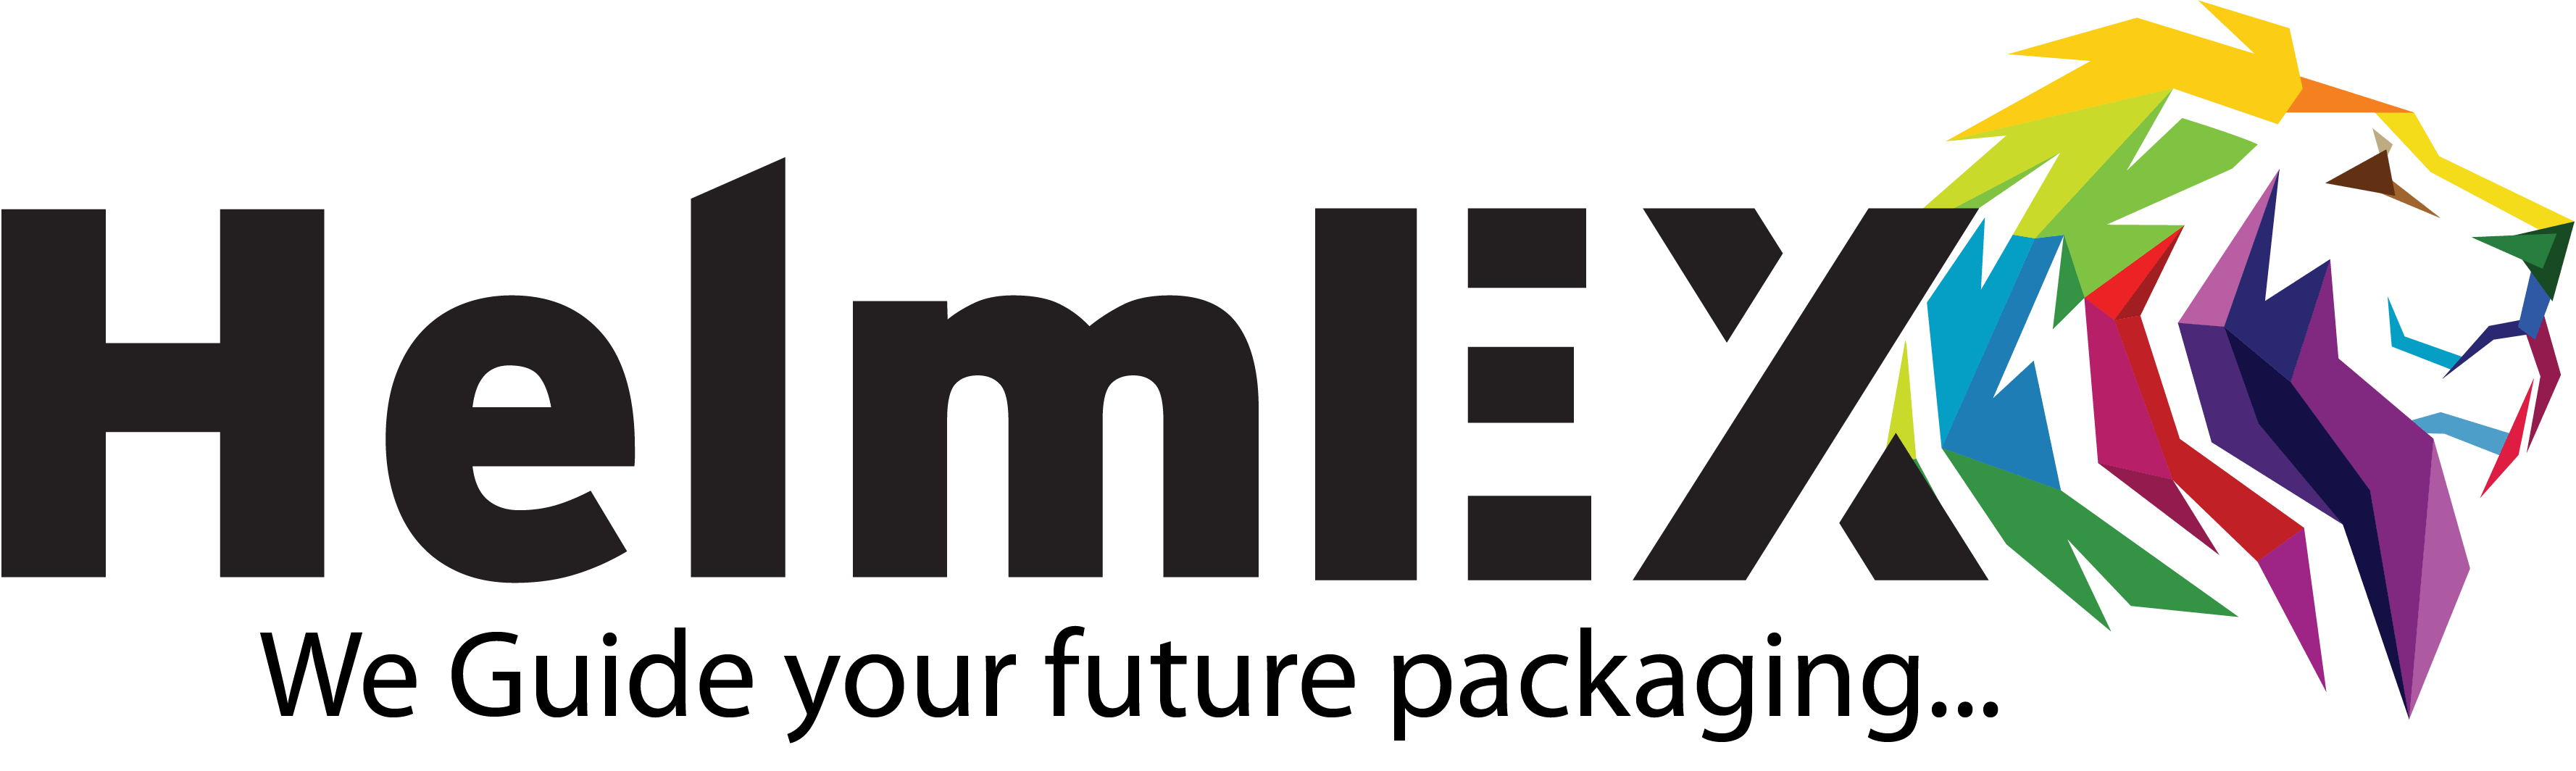 helmex-logo-slogan